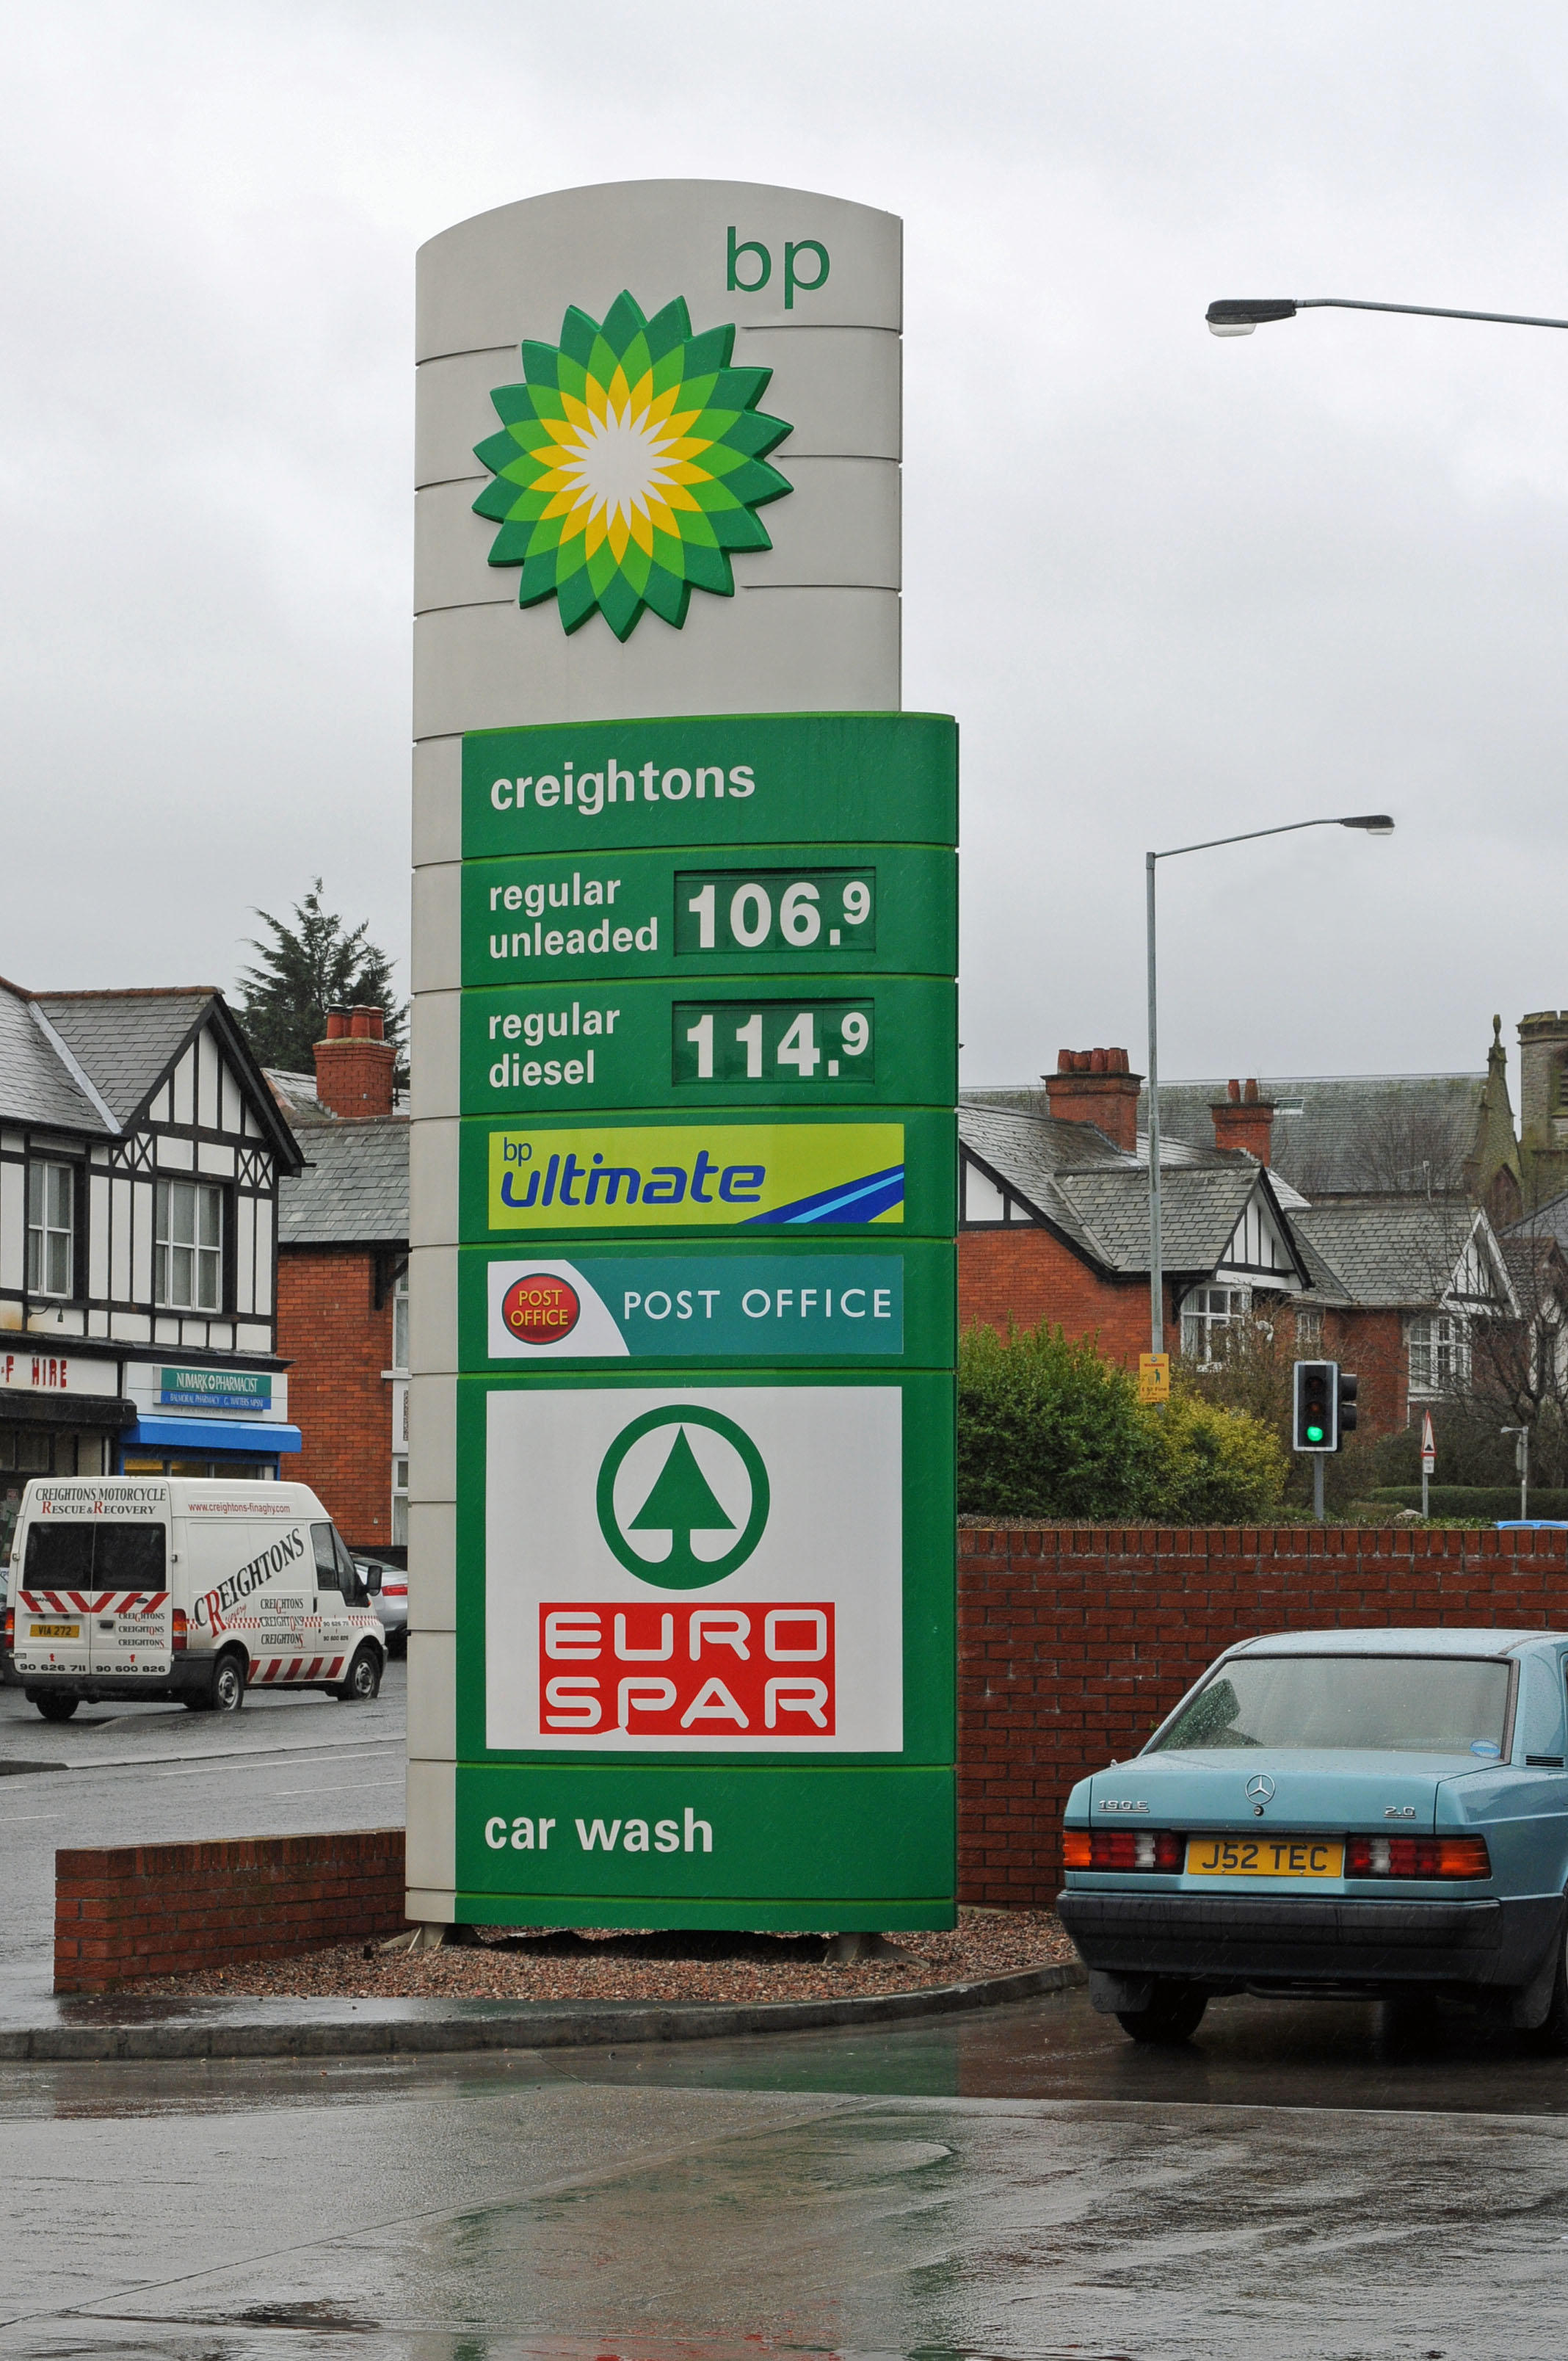 Price per liter in U.K. Pounds